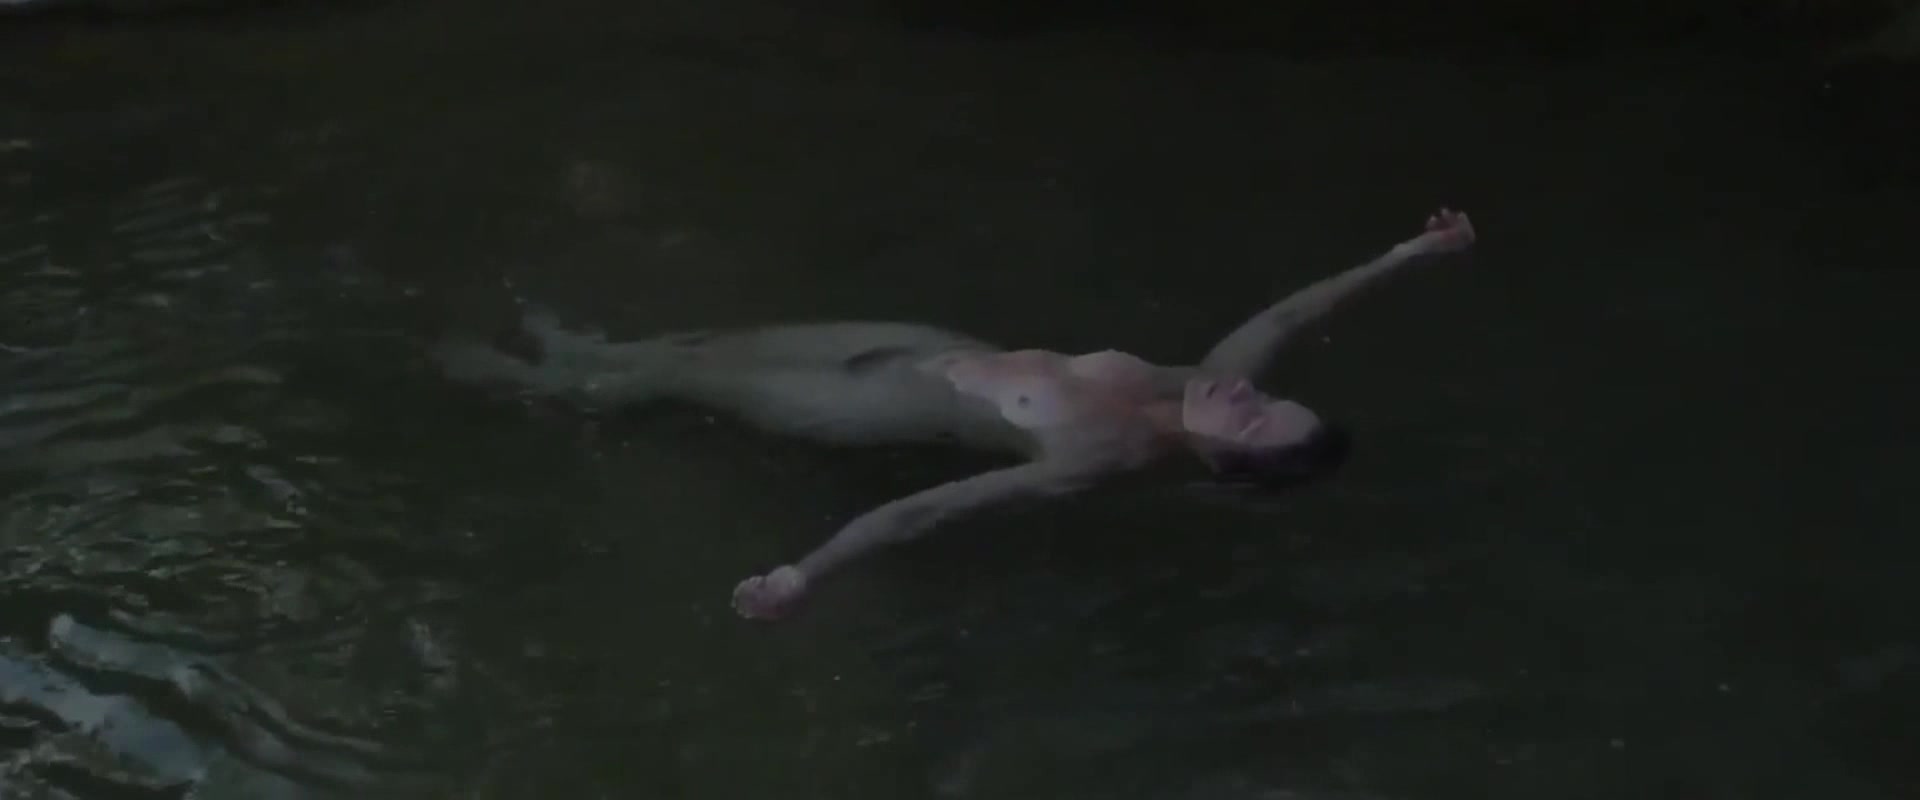 Nude francis mcdormand Oscarwinner nudity